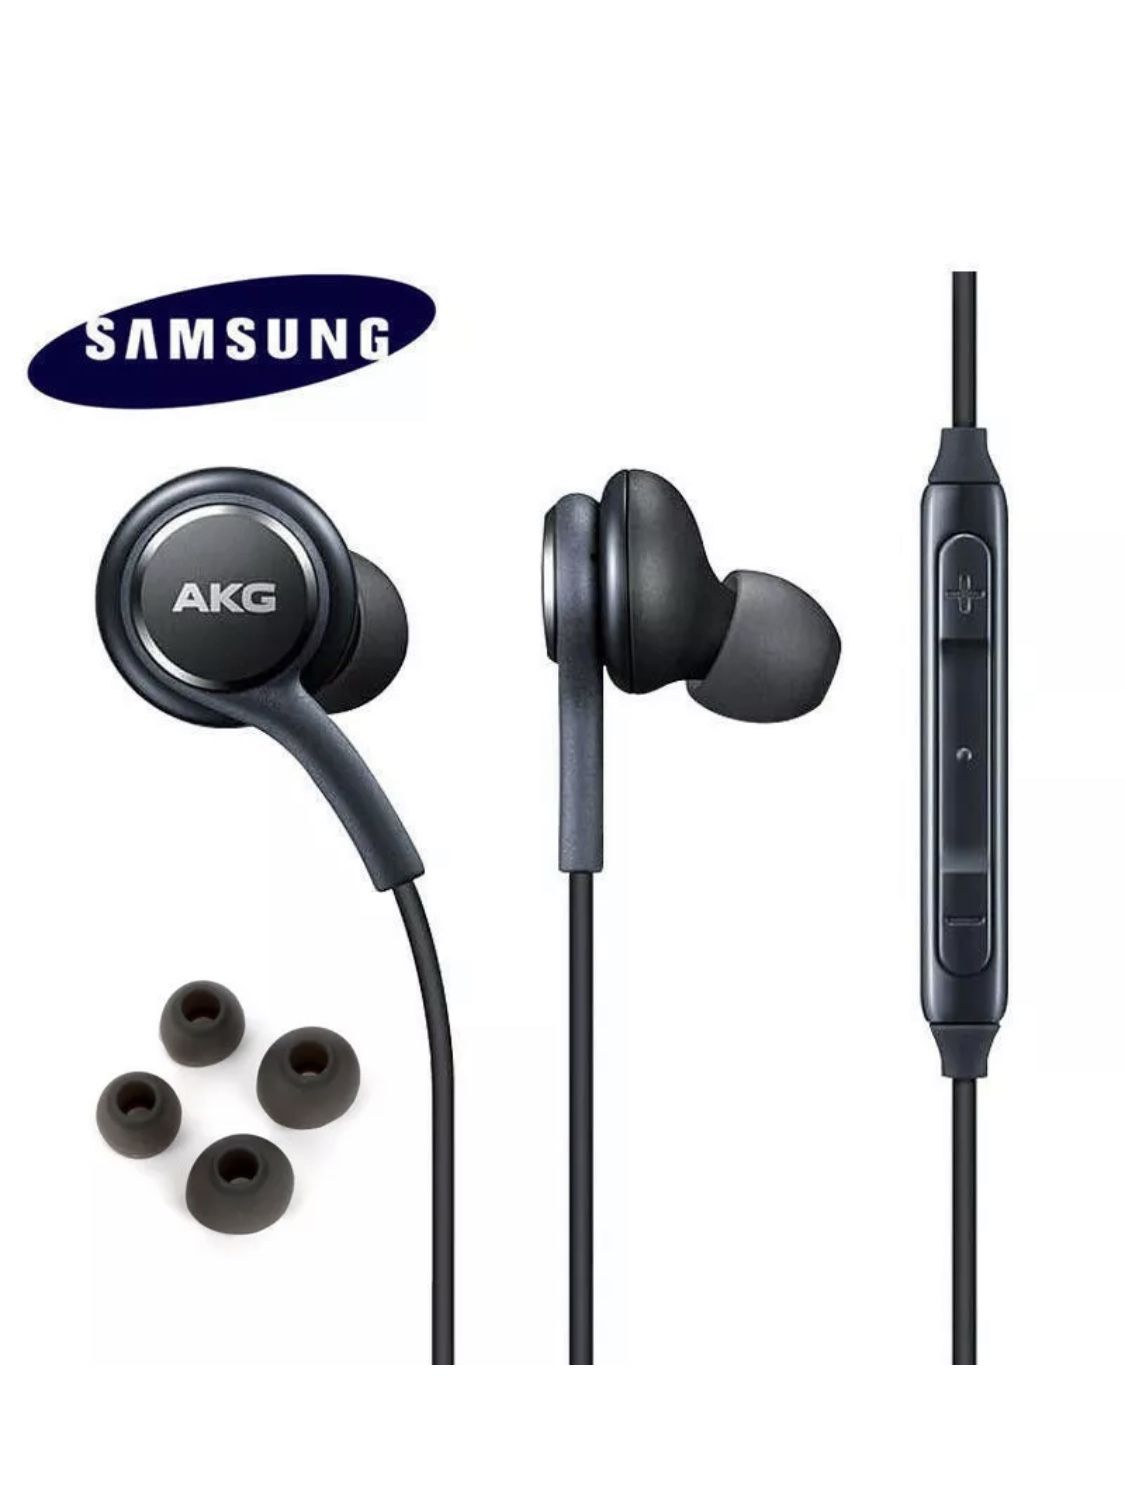 Genuine samsung Earphones Corded Tuned by AKG headphones black blue with earbuds